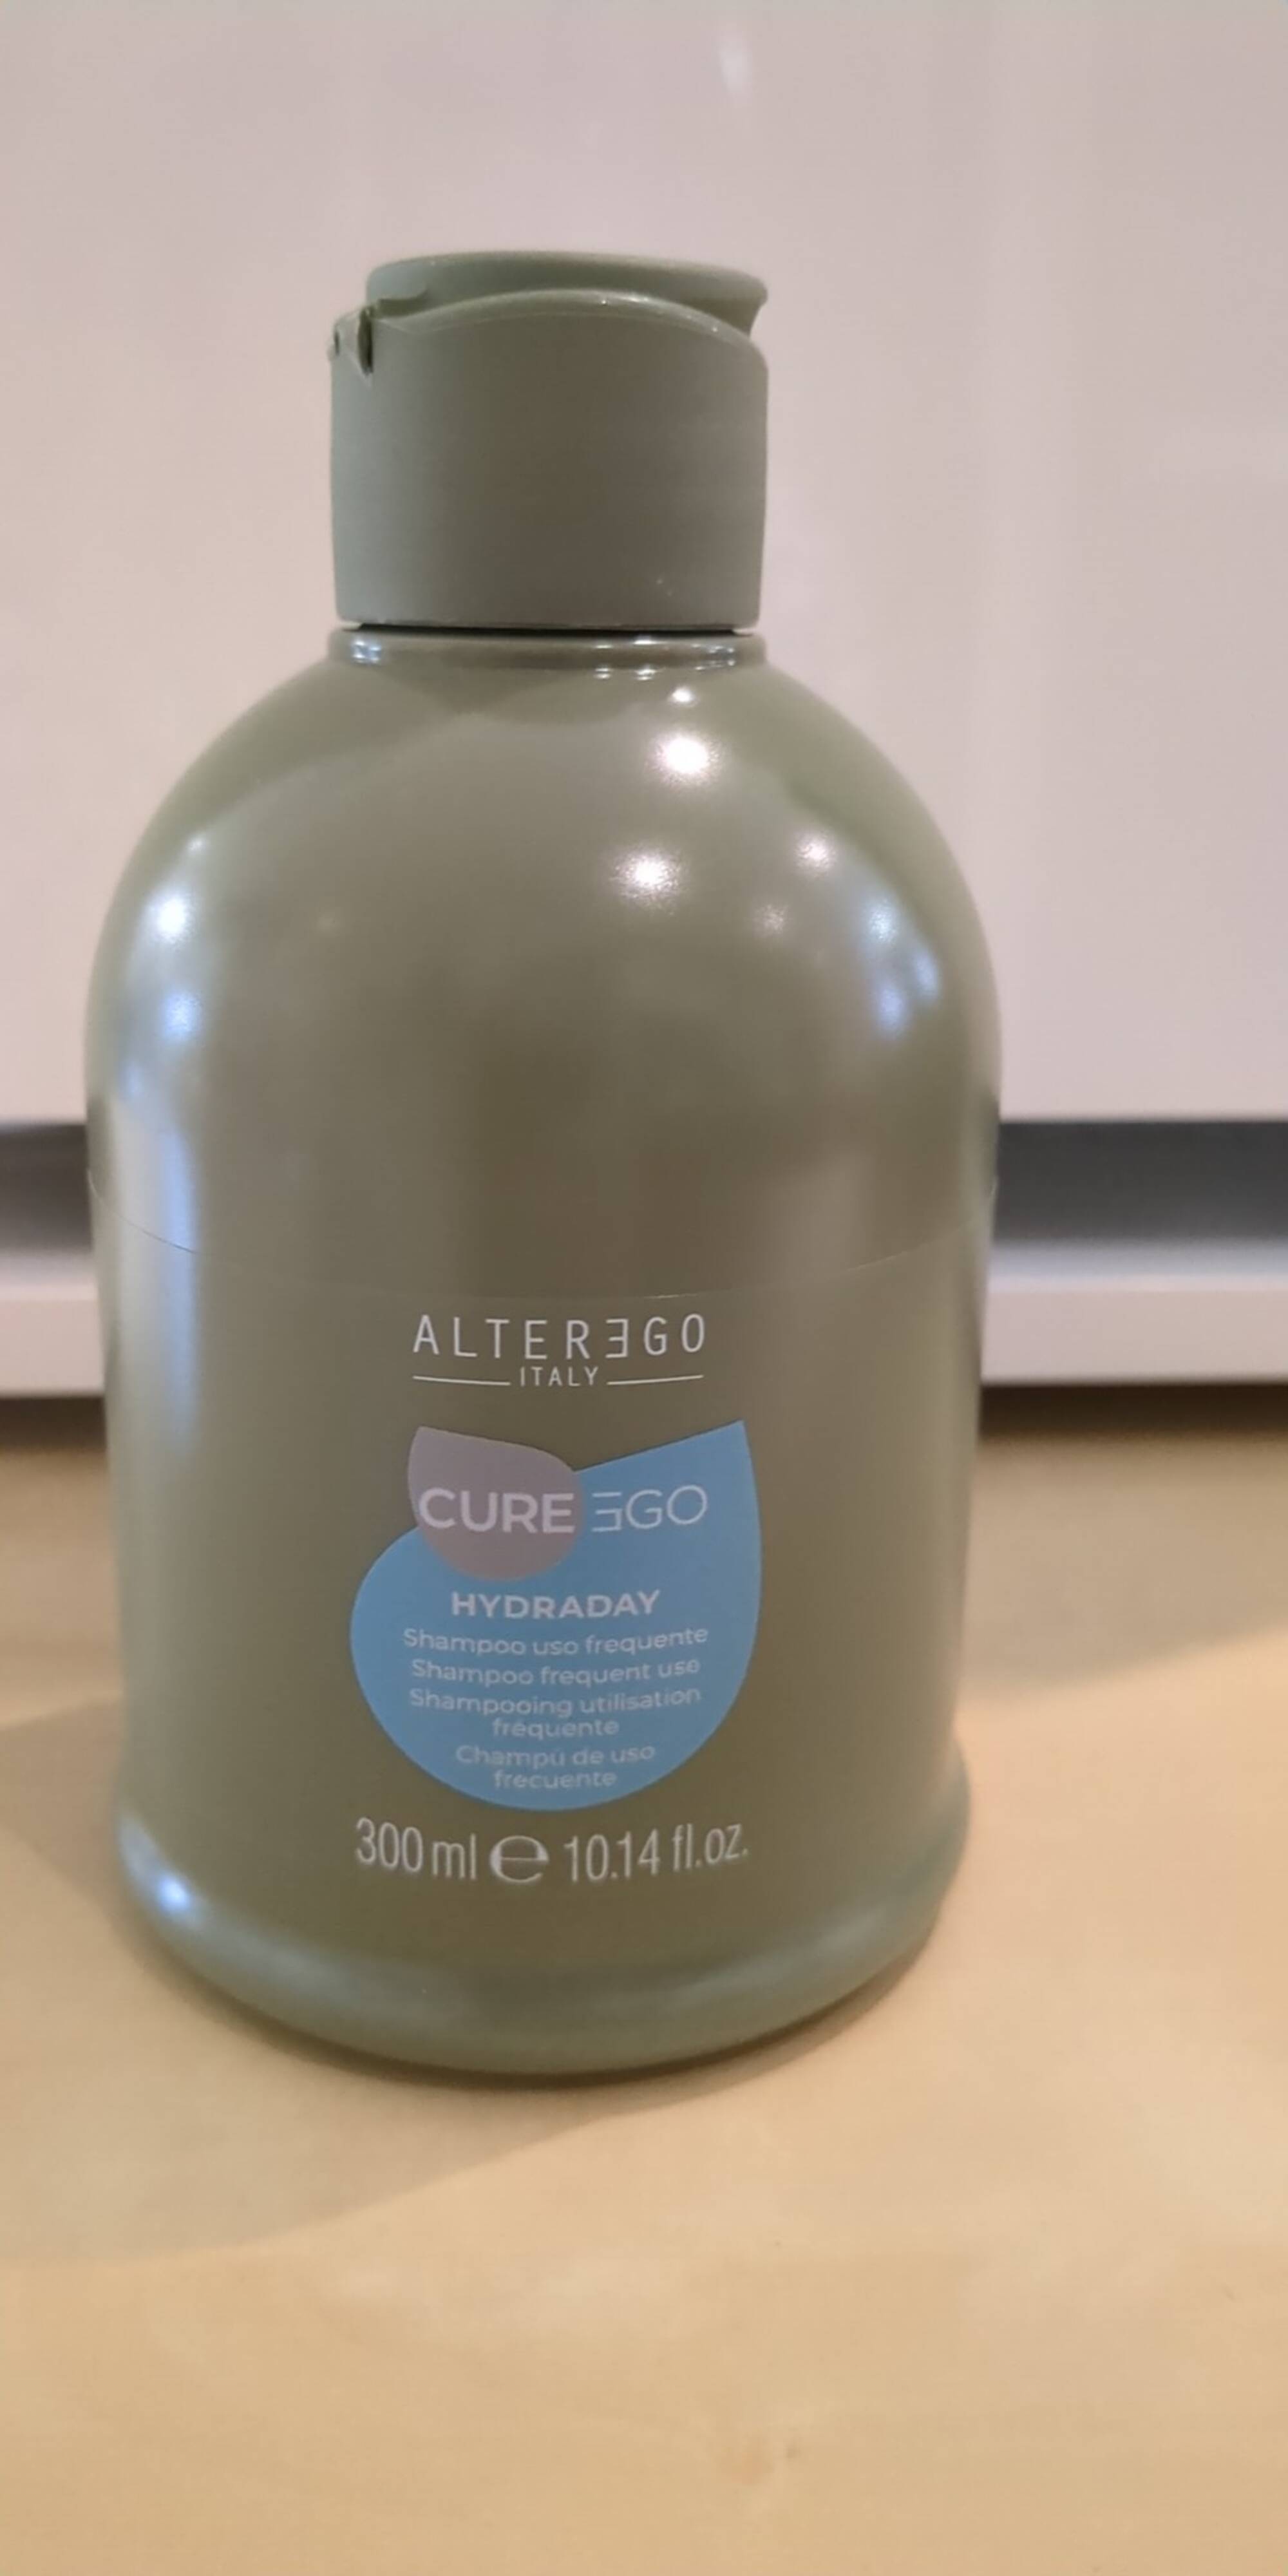 ALTER EGO - Cure ego hydraday - Shampooing